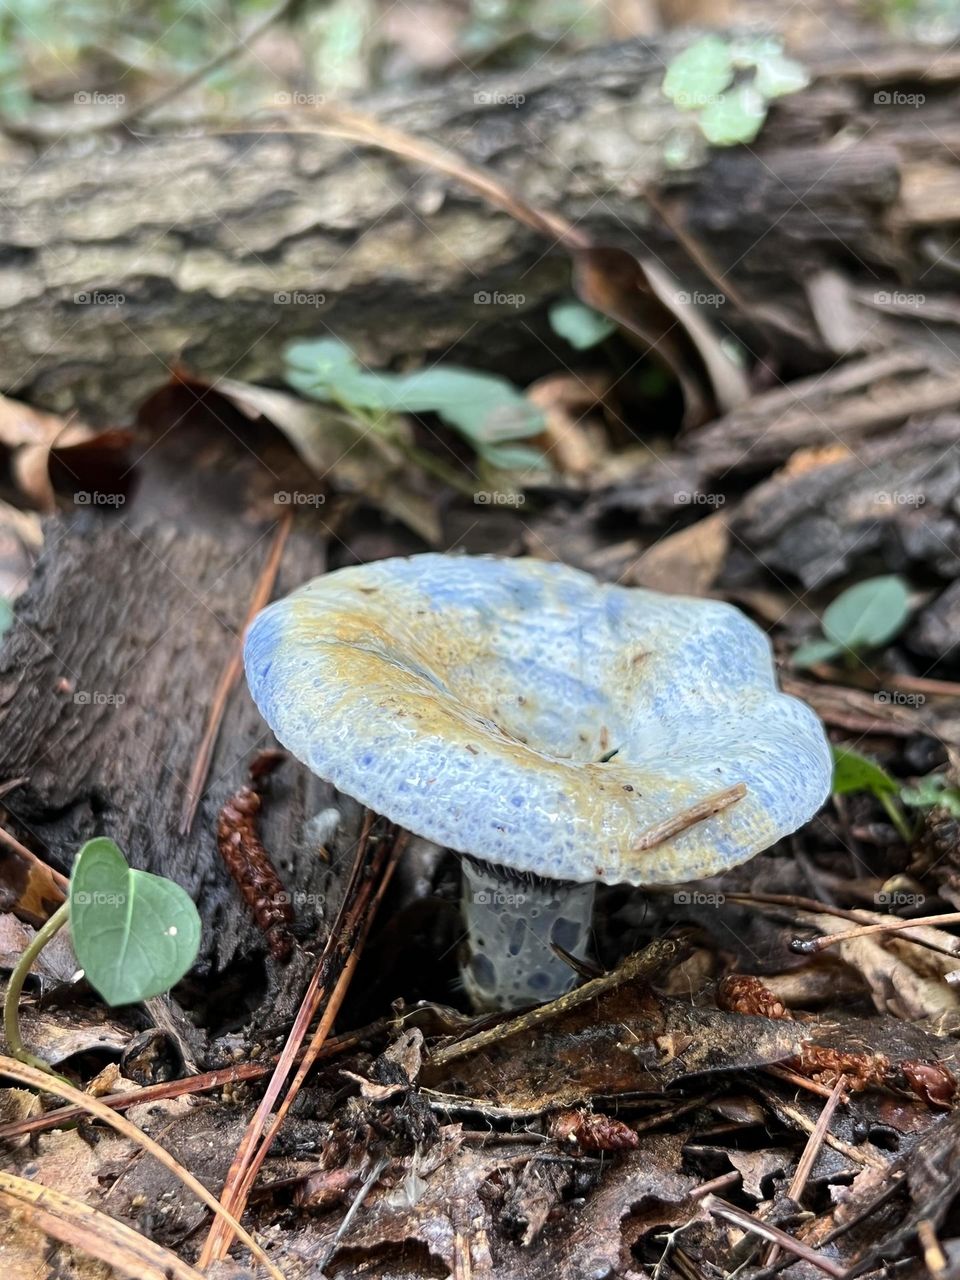 Closeup of indigo milk cap mushroom. The bright blue color is unusual in the forest.